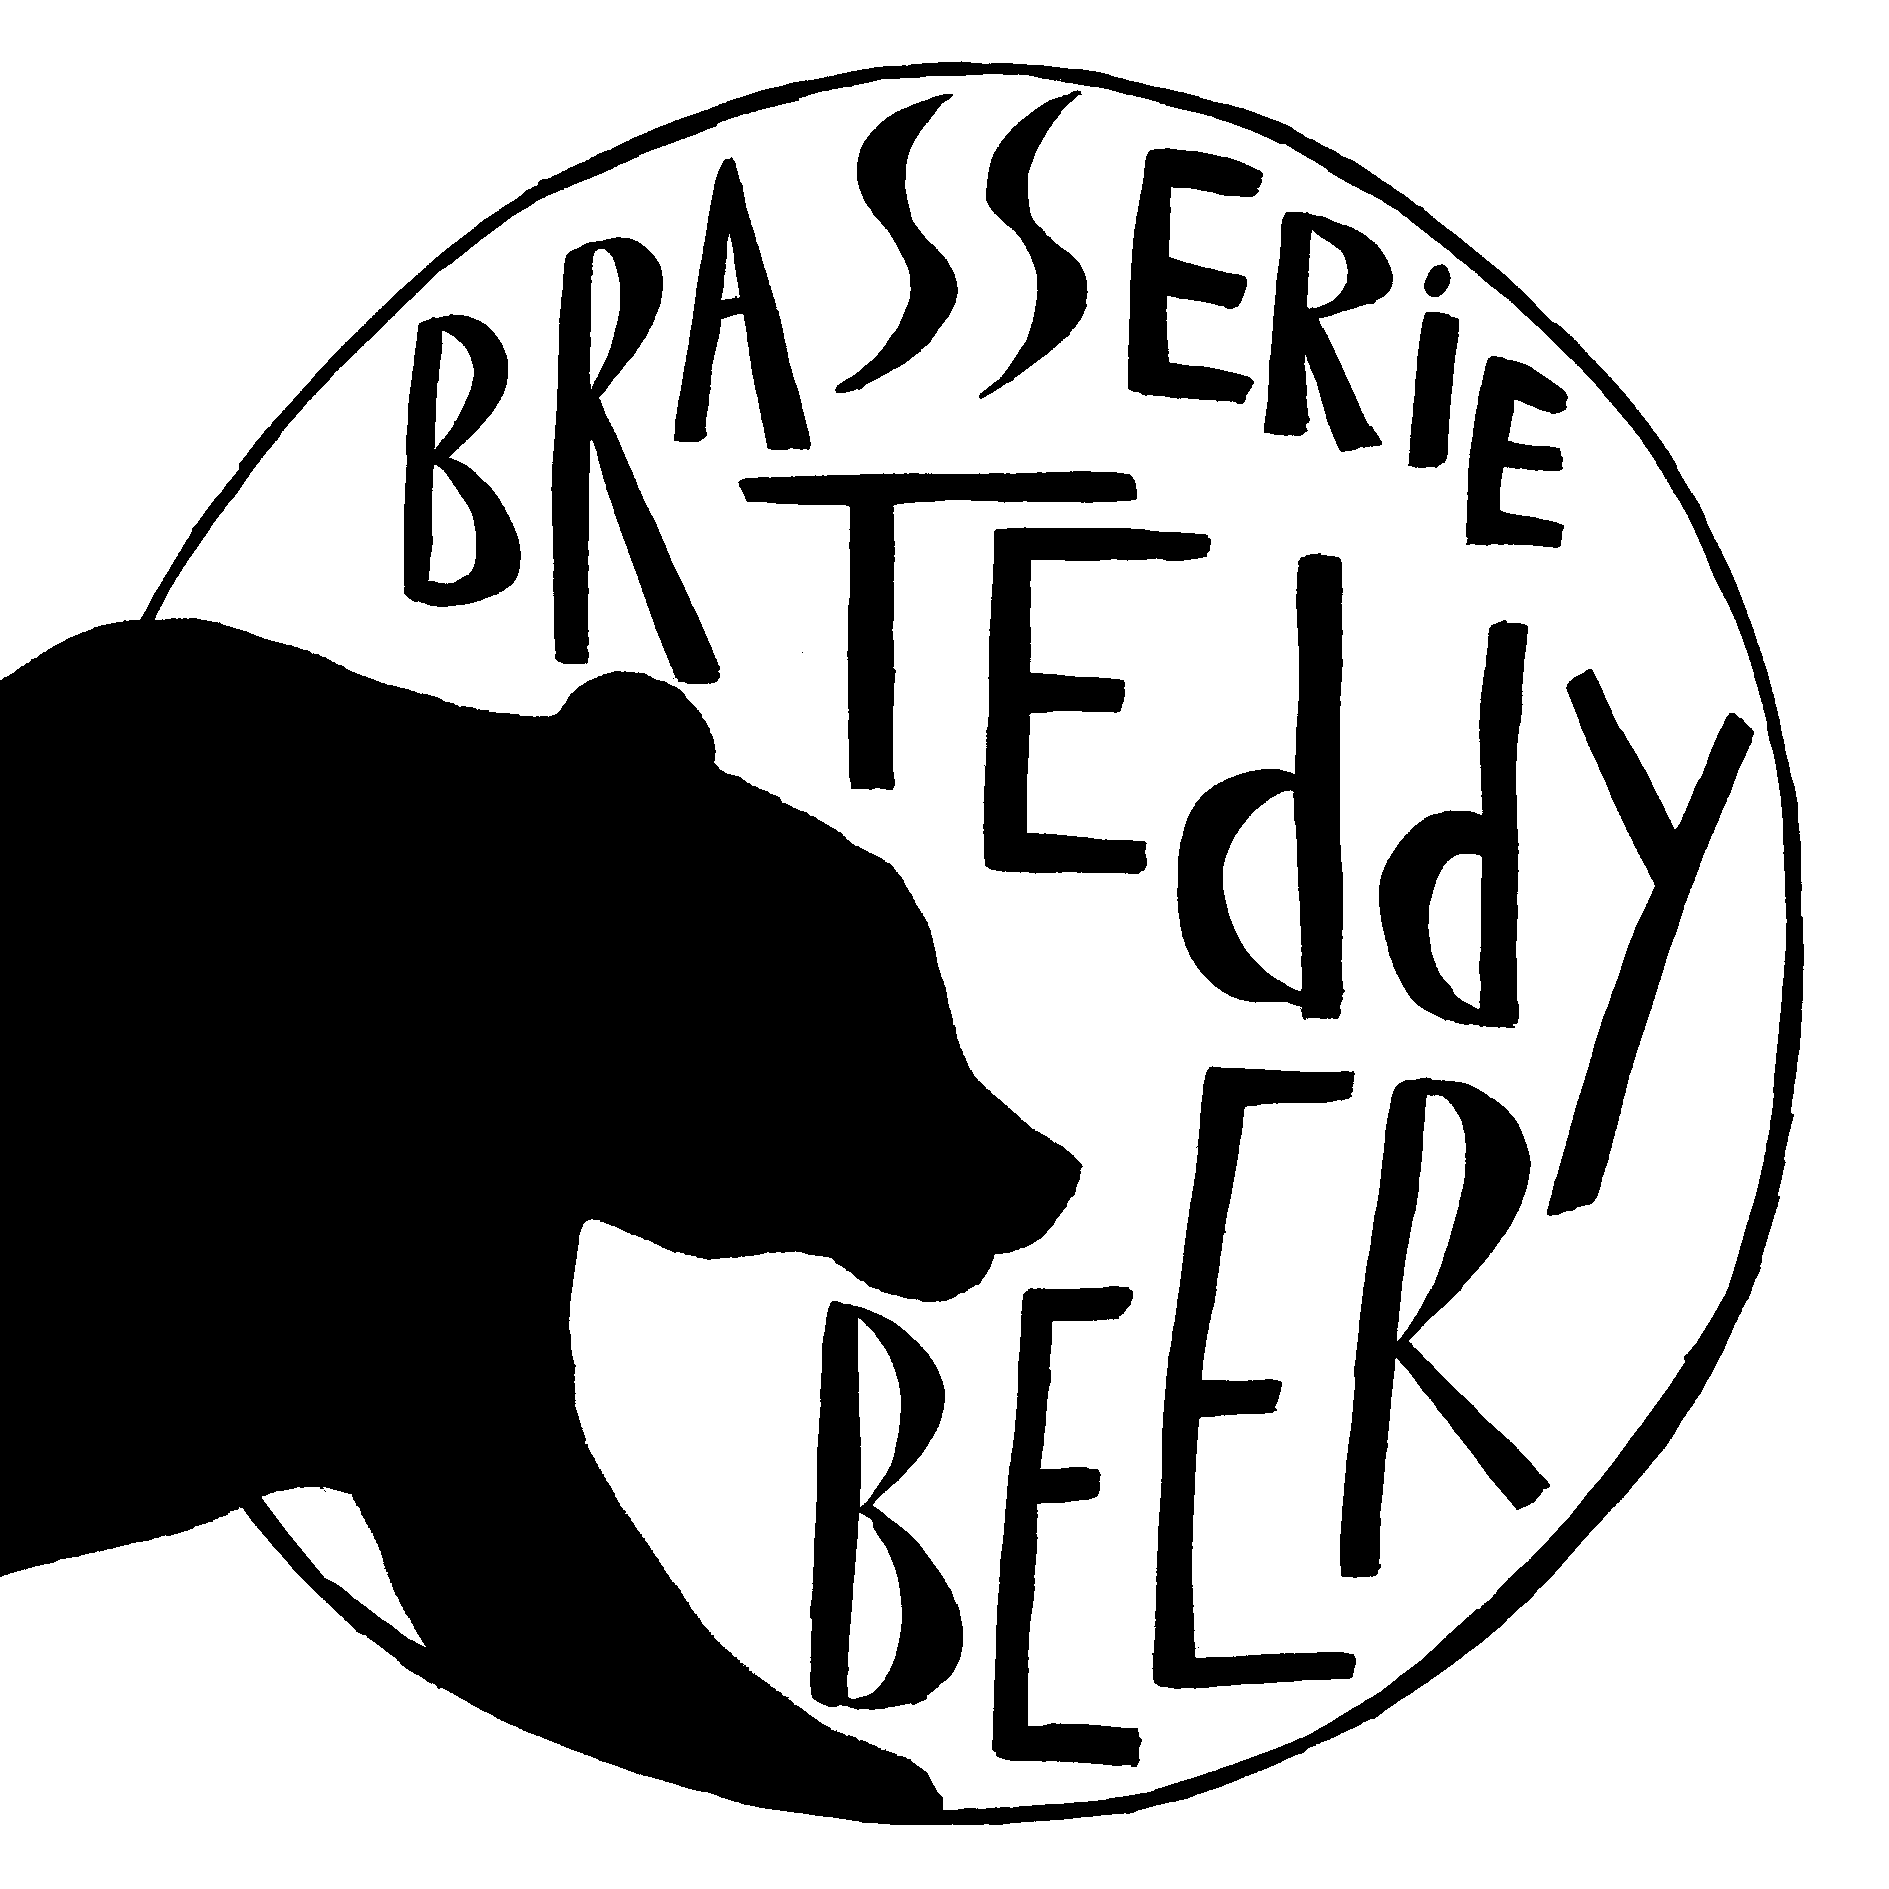 Brasserie Teddy Beer